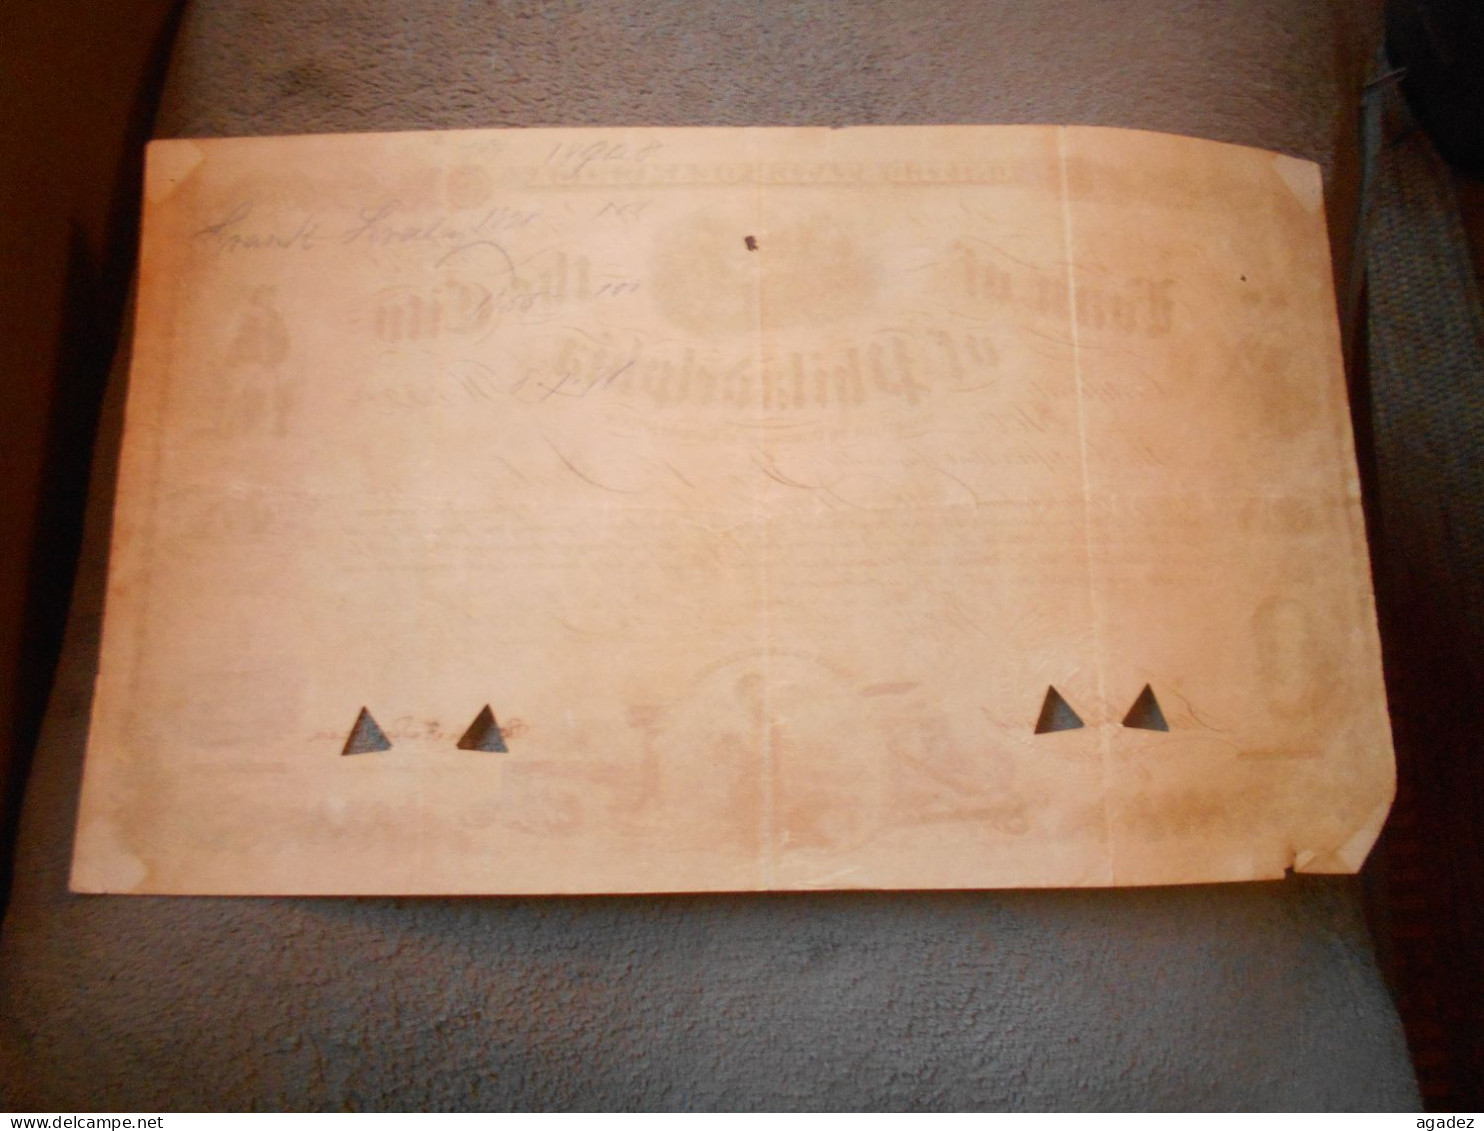 Certificate Loan Of The City Of Philadelphia 1871 - Industrial